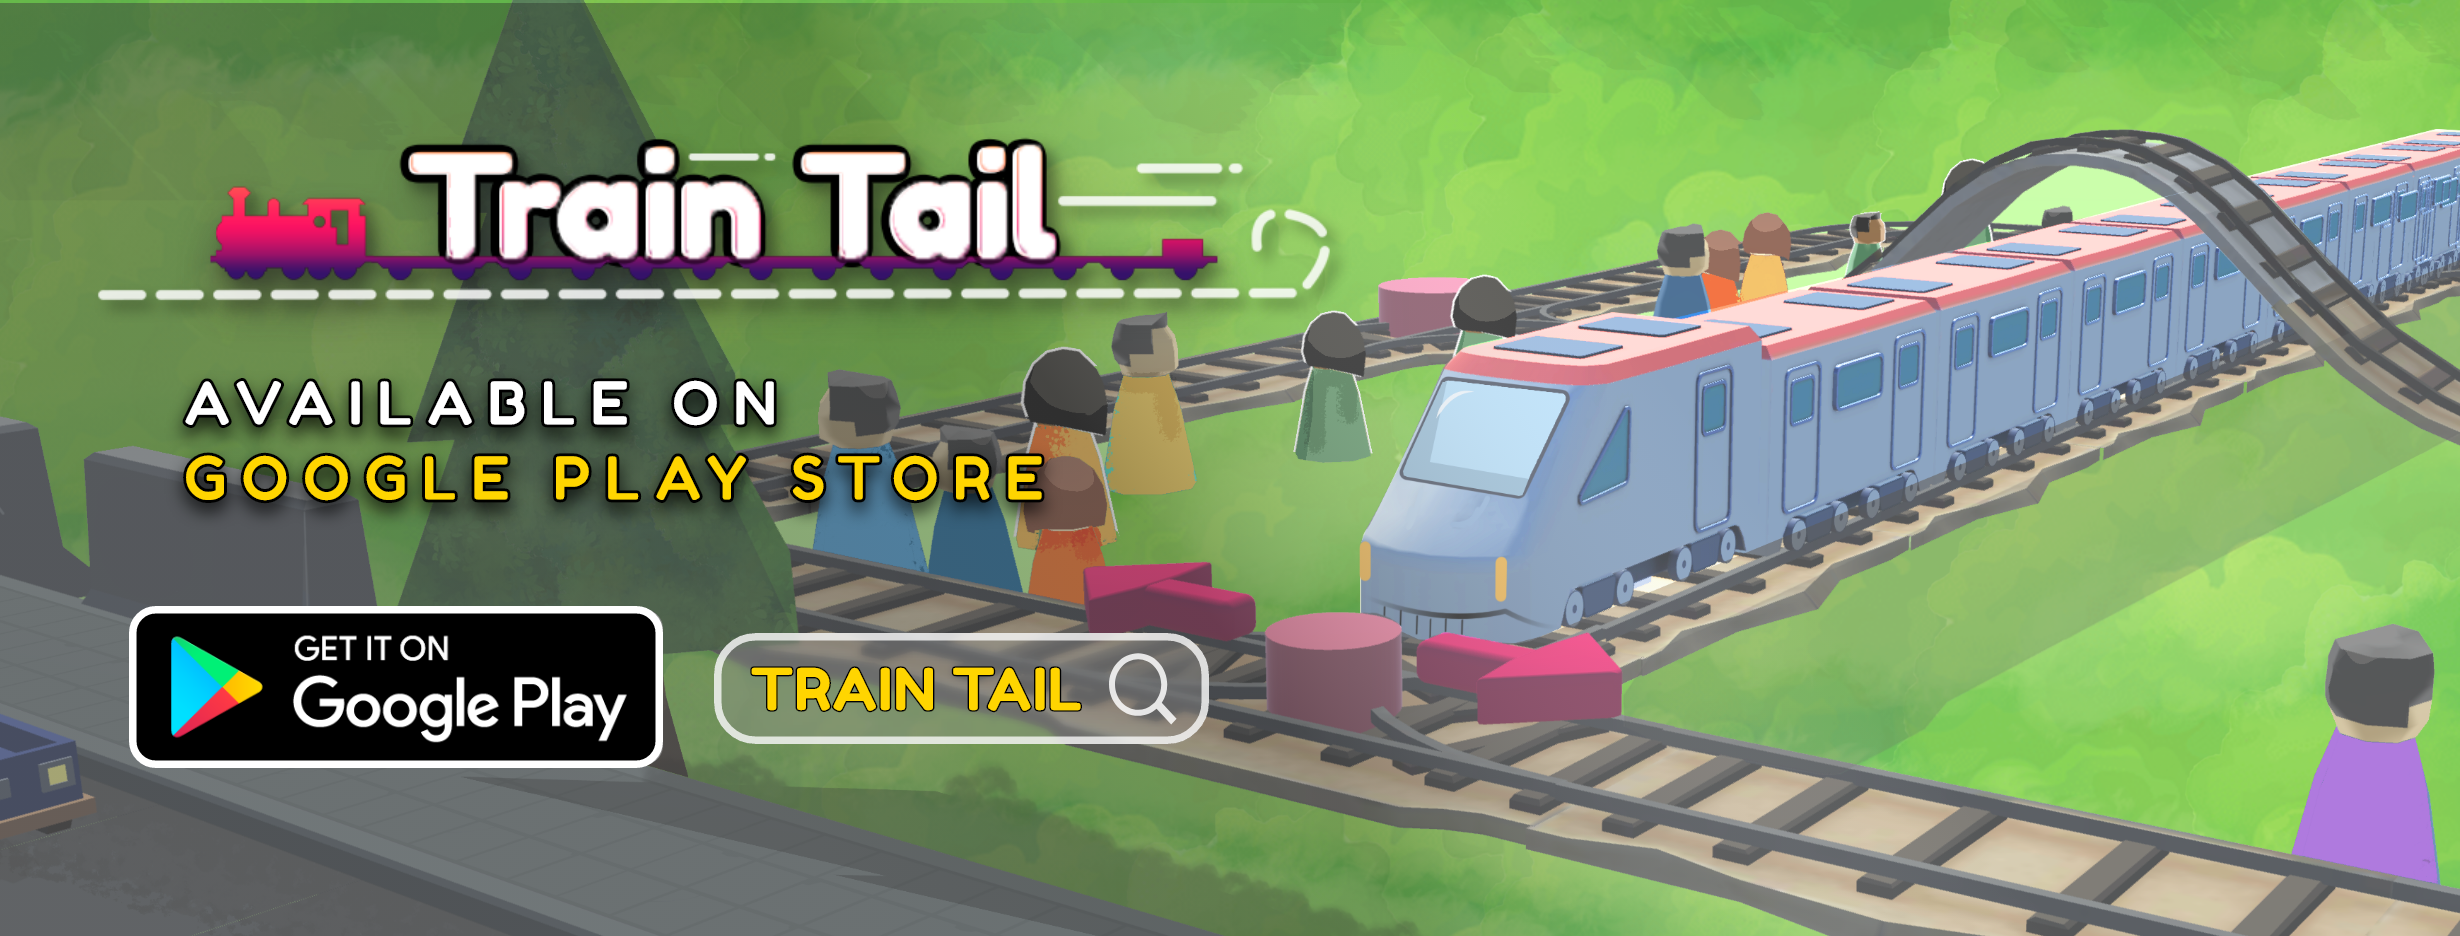 Train Tail